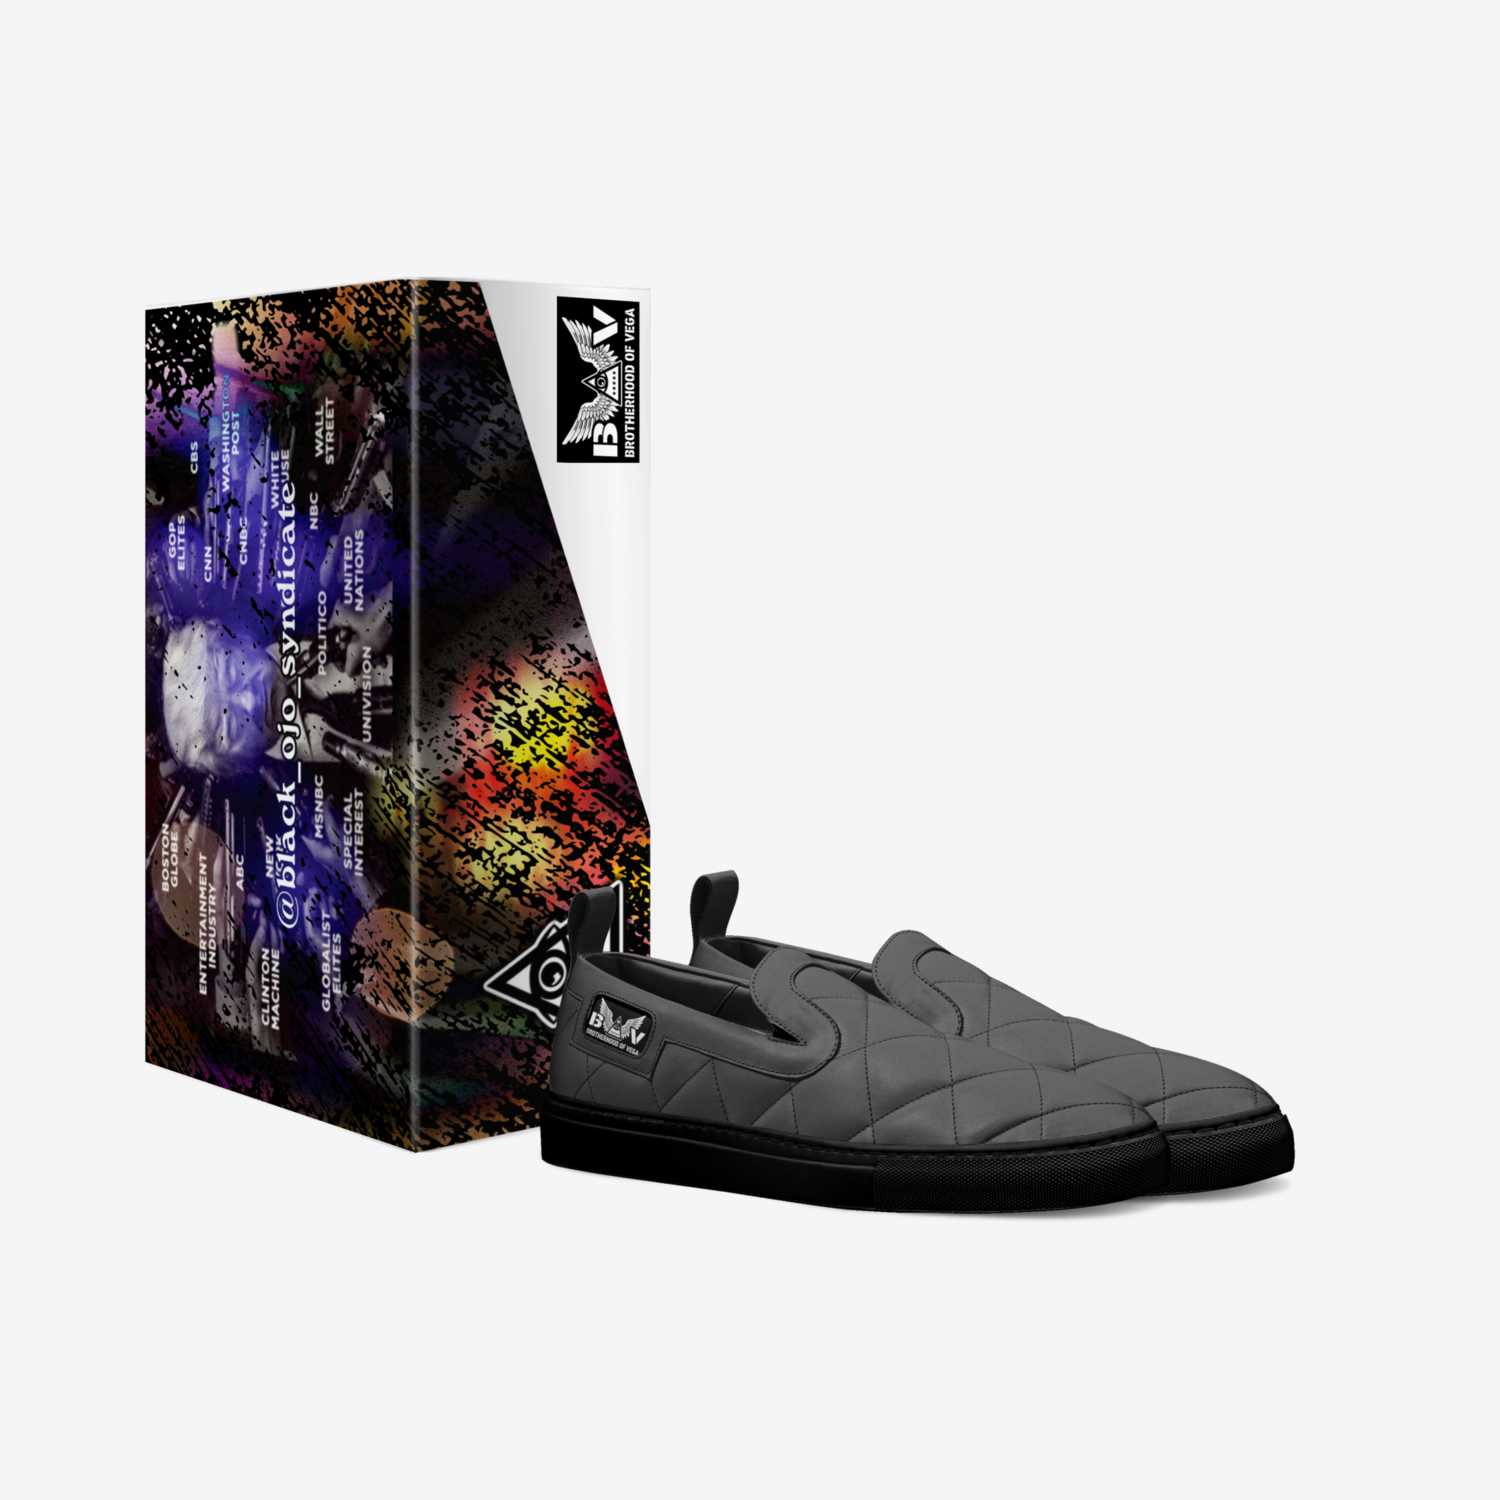 B.O.V custom made in Italy shoes by Redstar Mafia | Box view